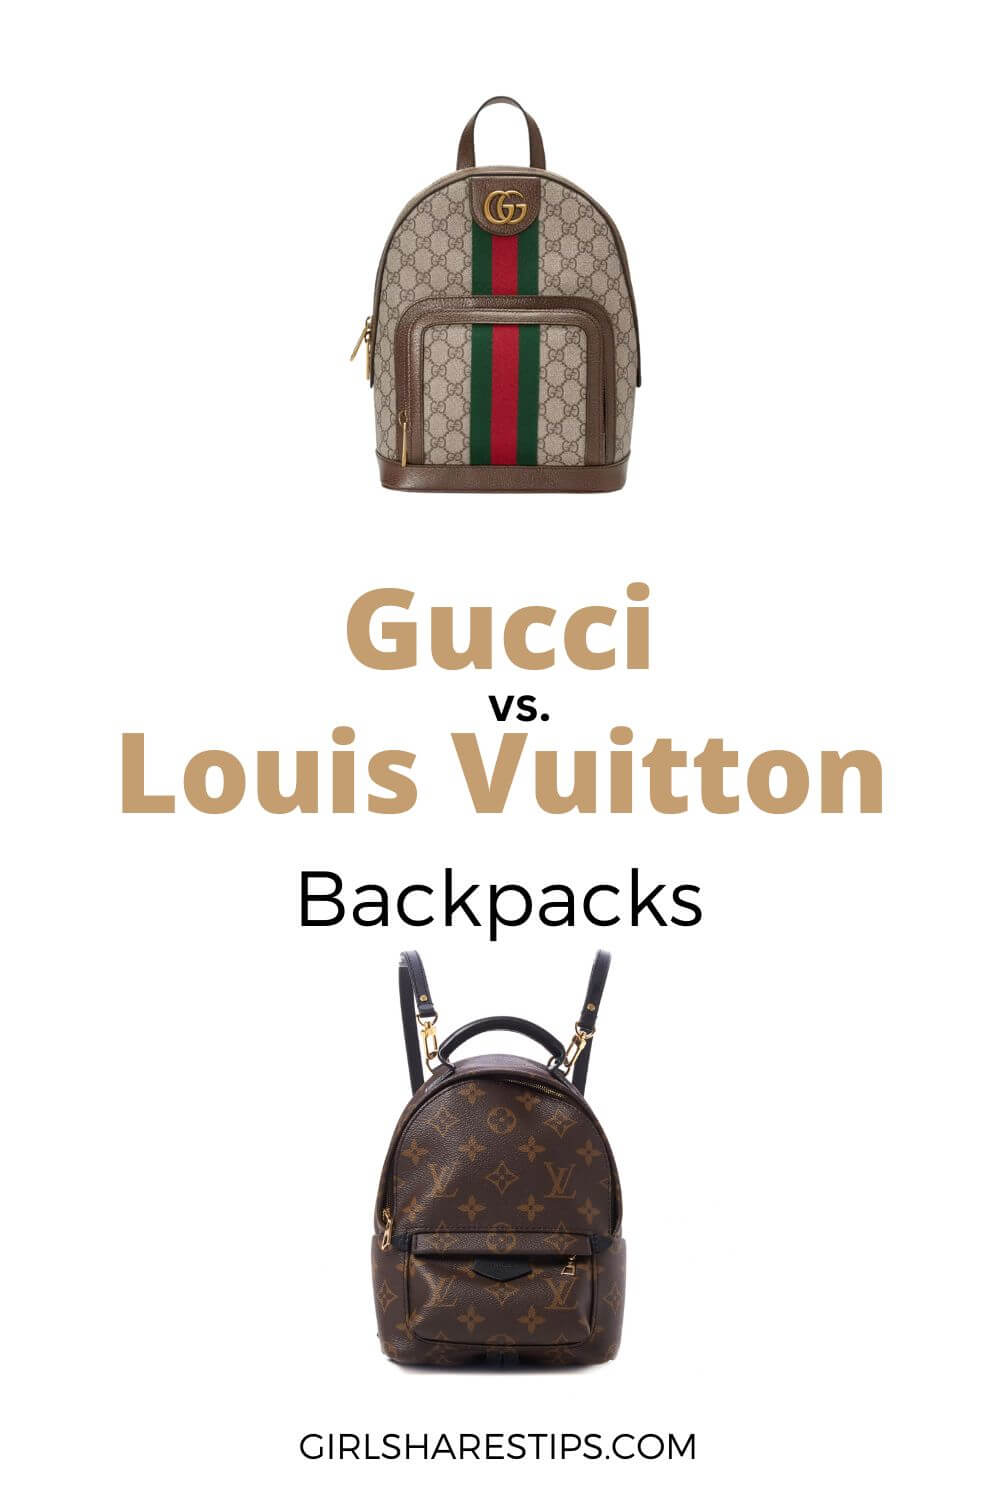 Gucci vs Louis Vuitton backpacks